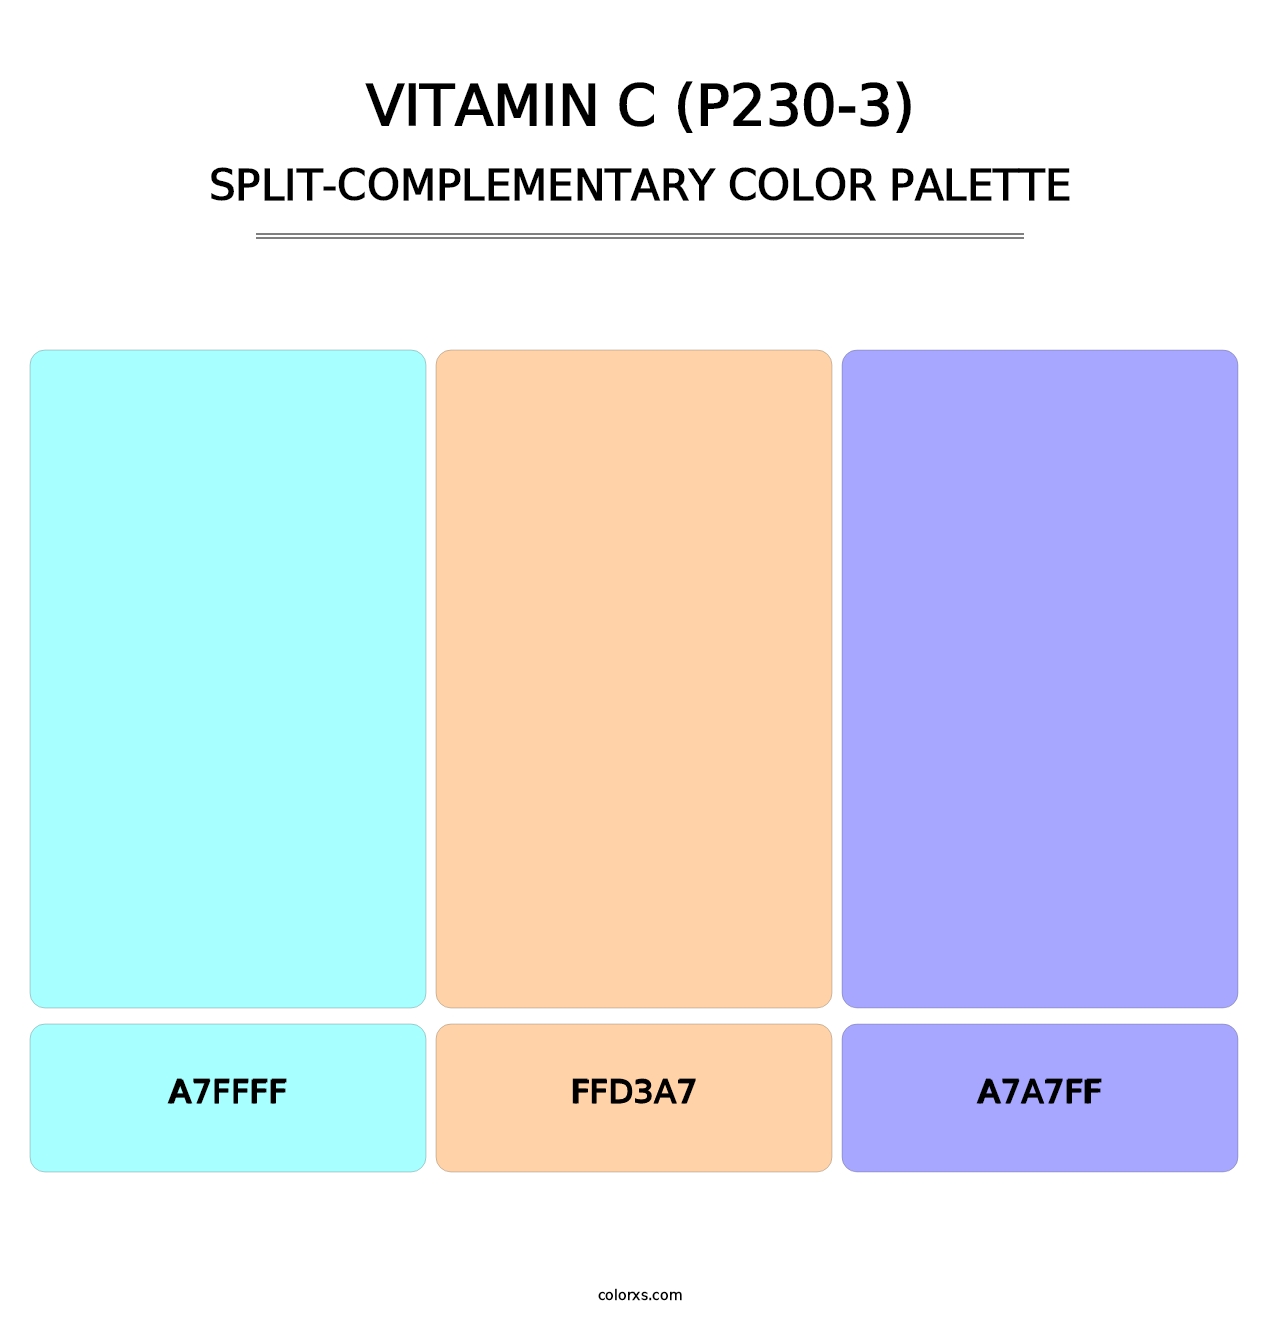 Vitamin C (P230-3) - Split-Complementary Color Palette